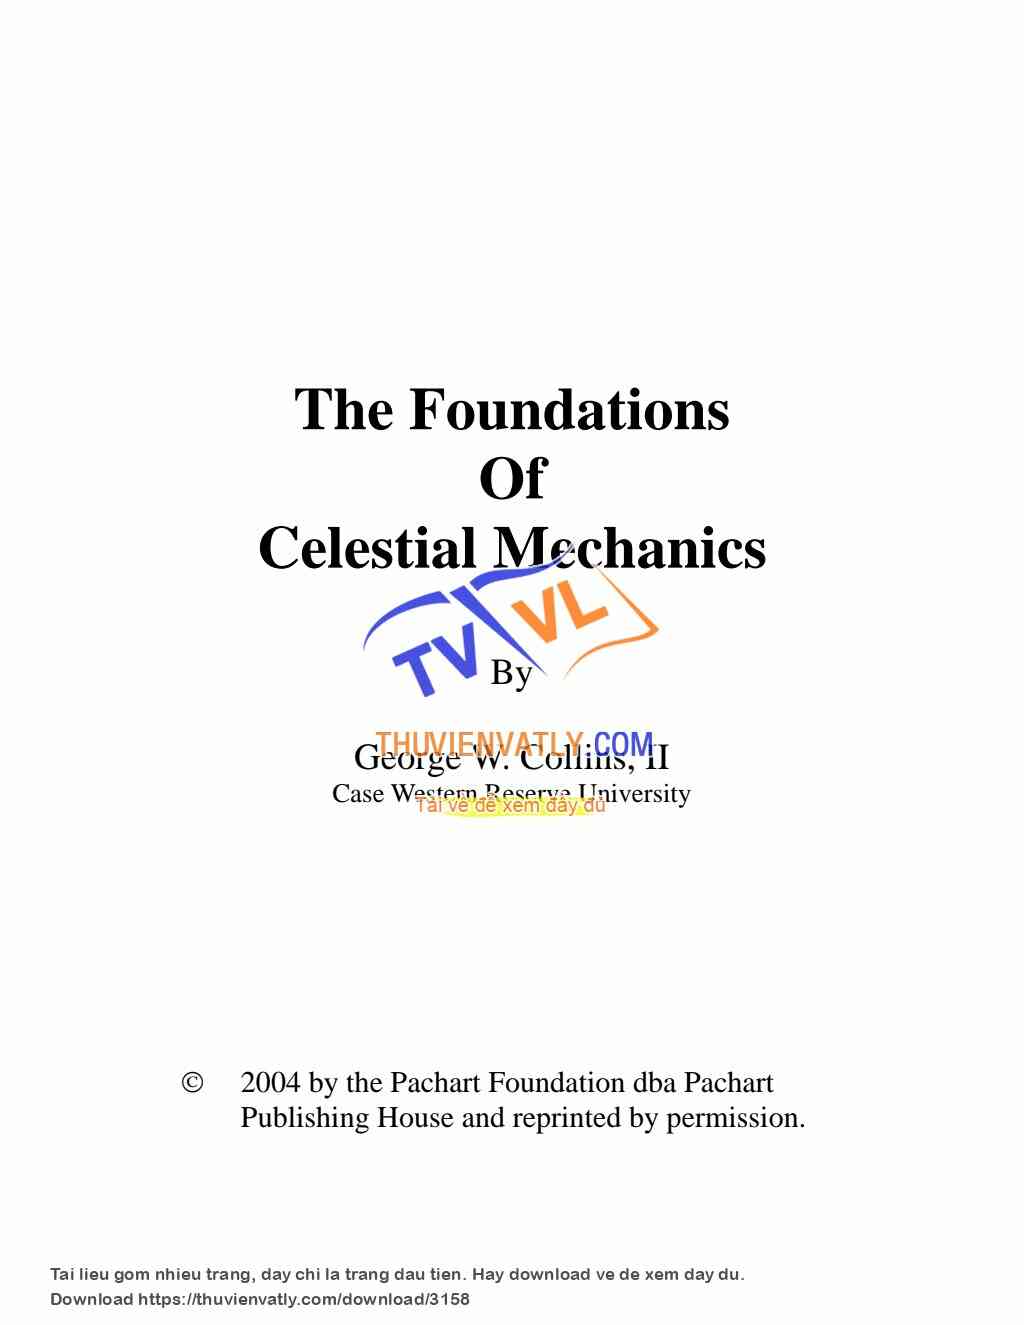 The Foundations Of Celestial Mechanics